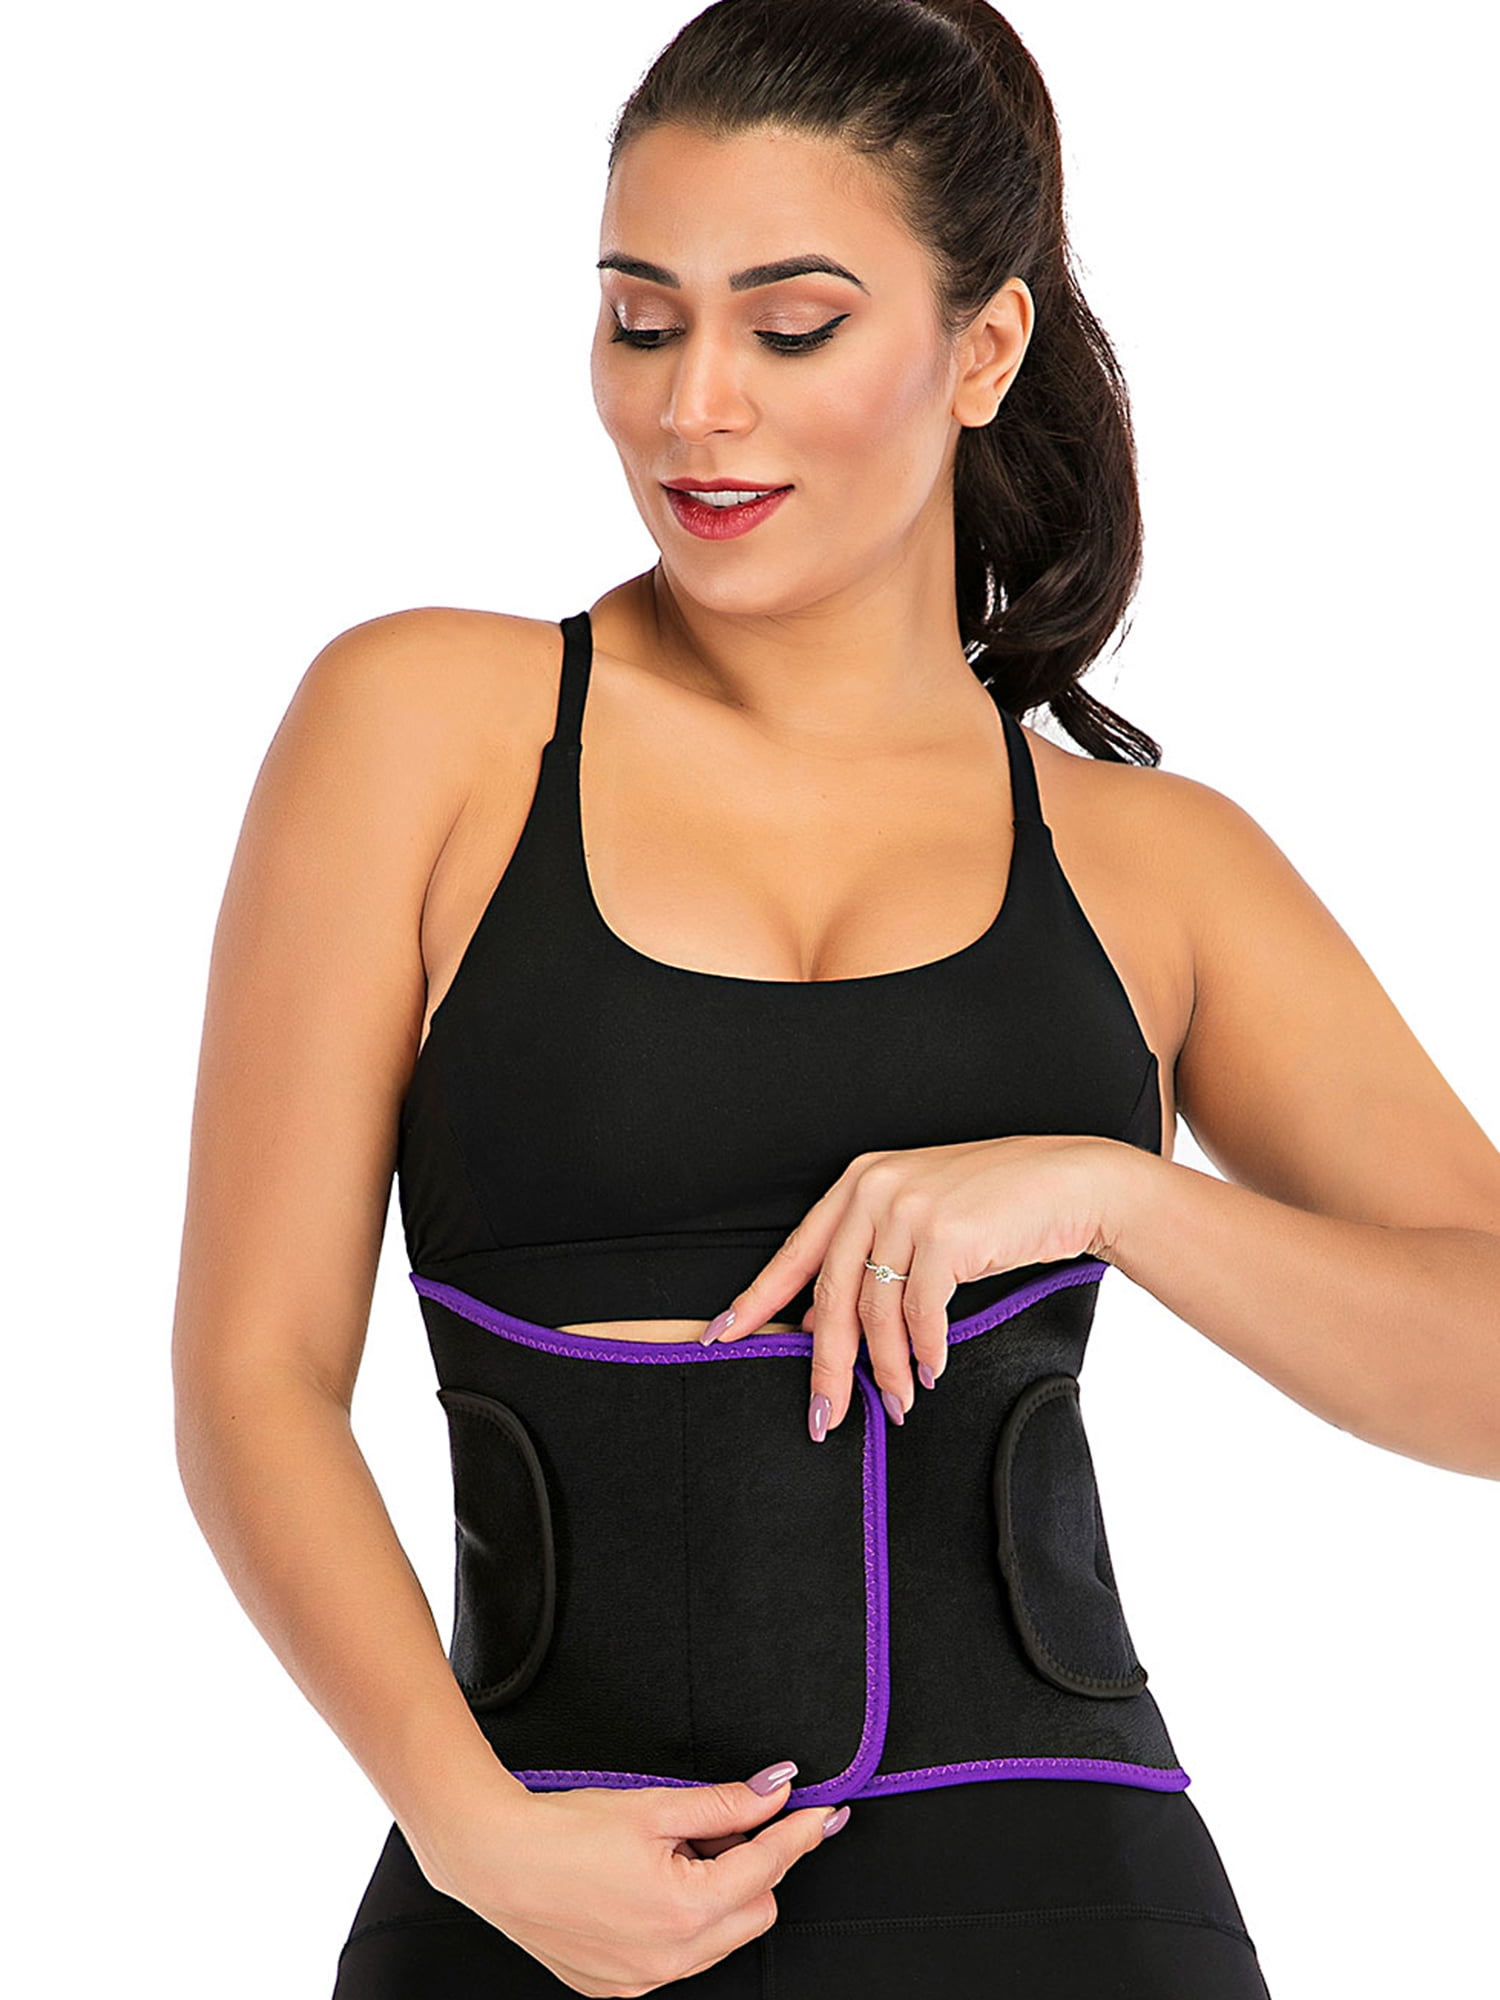 Zehamy Women 100% Latex Waist Trainer Cincher Corset Weight Loss Slimming With Adjustable Waist Shaper Belt High Compression